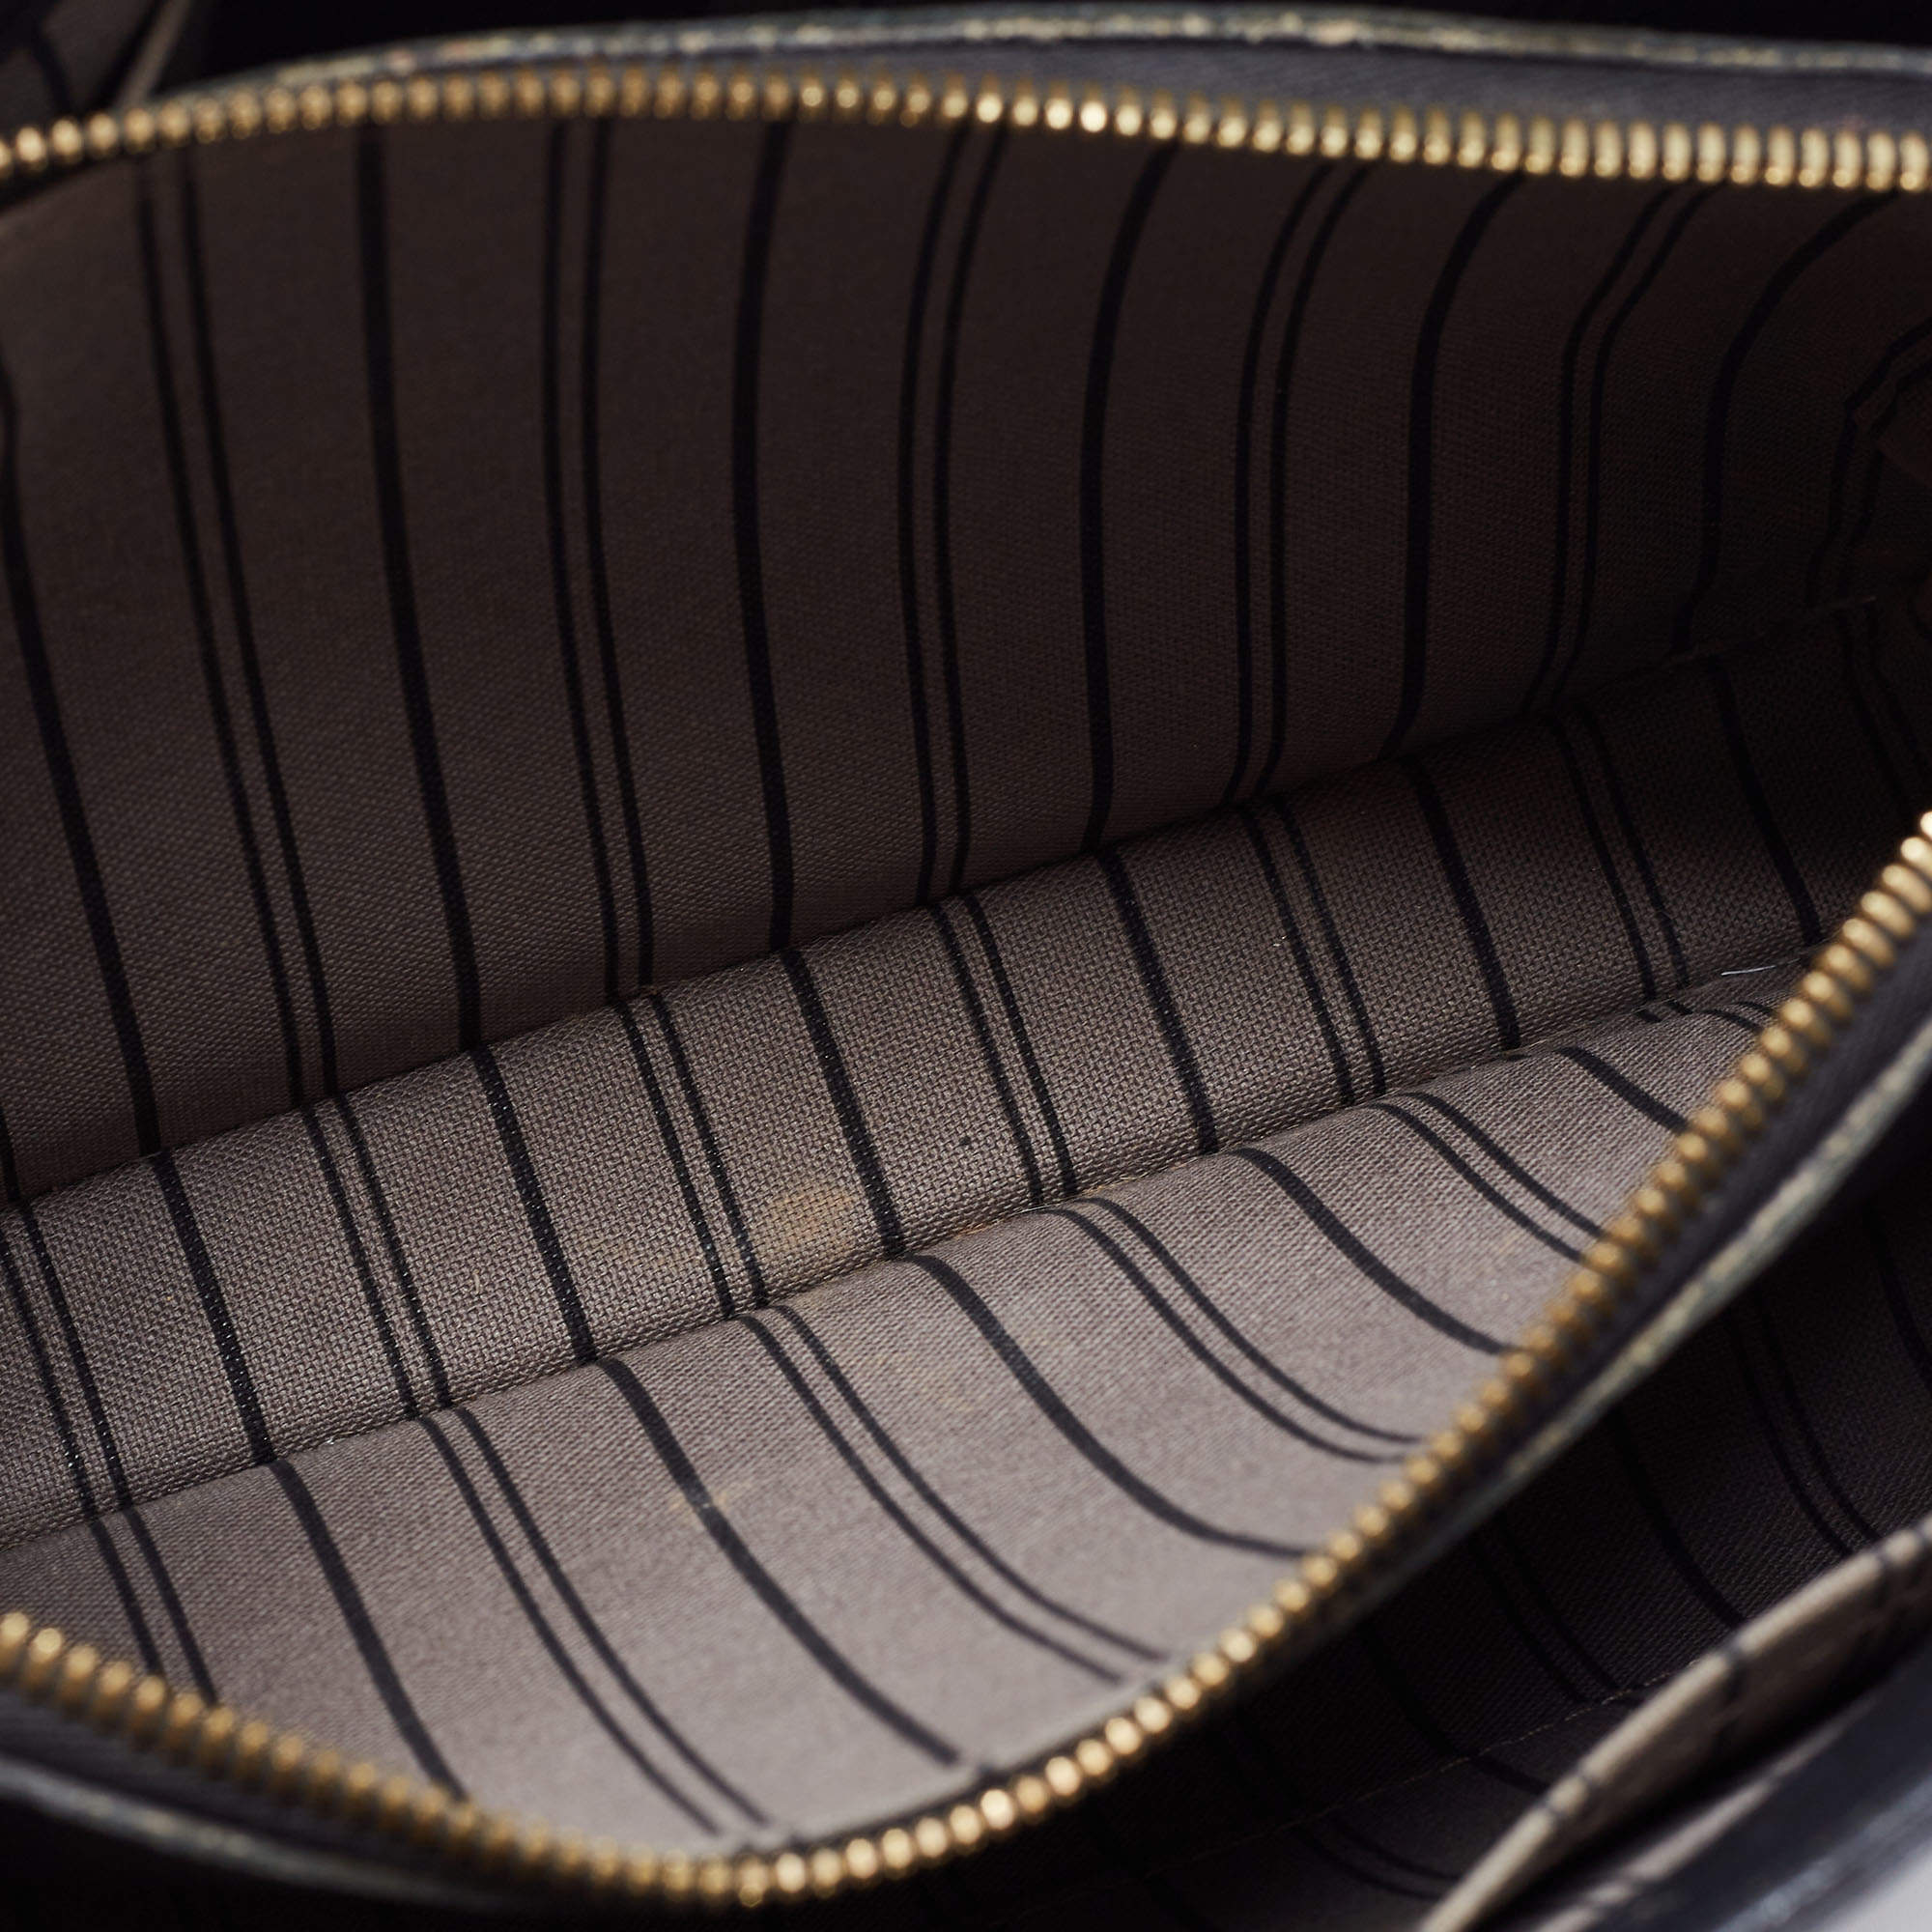 Montaigne leather handbag Louis Vuitton Black in Leather - 31824829